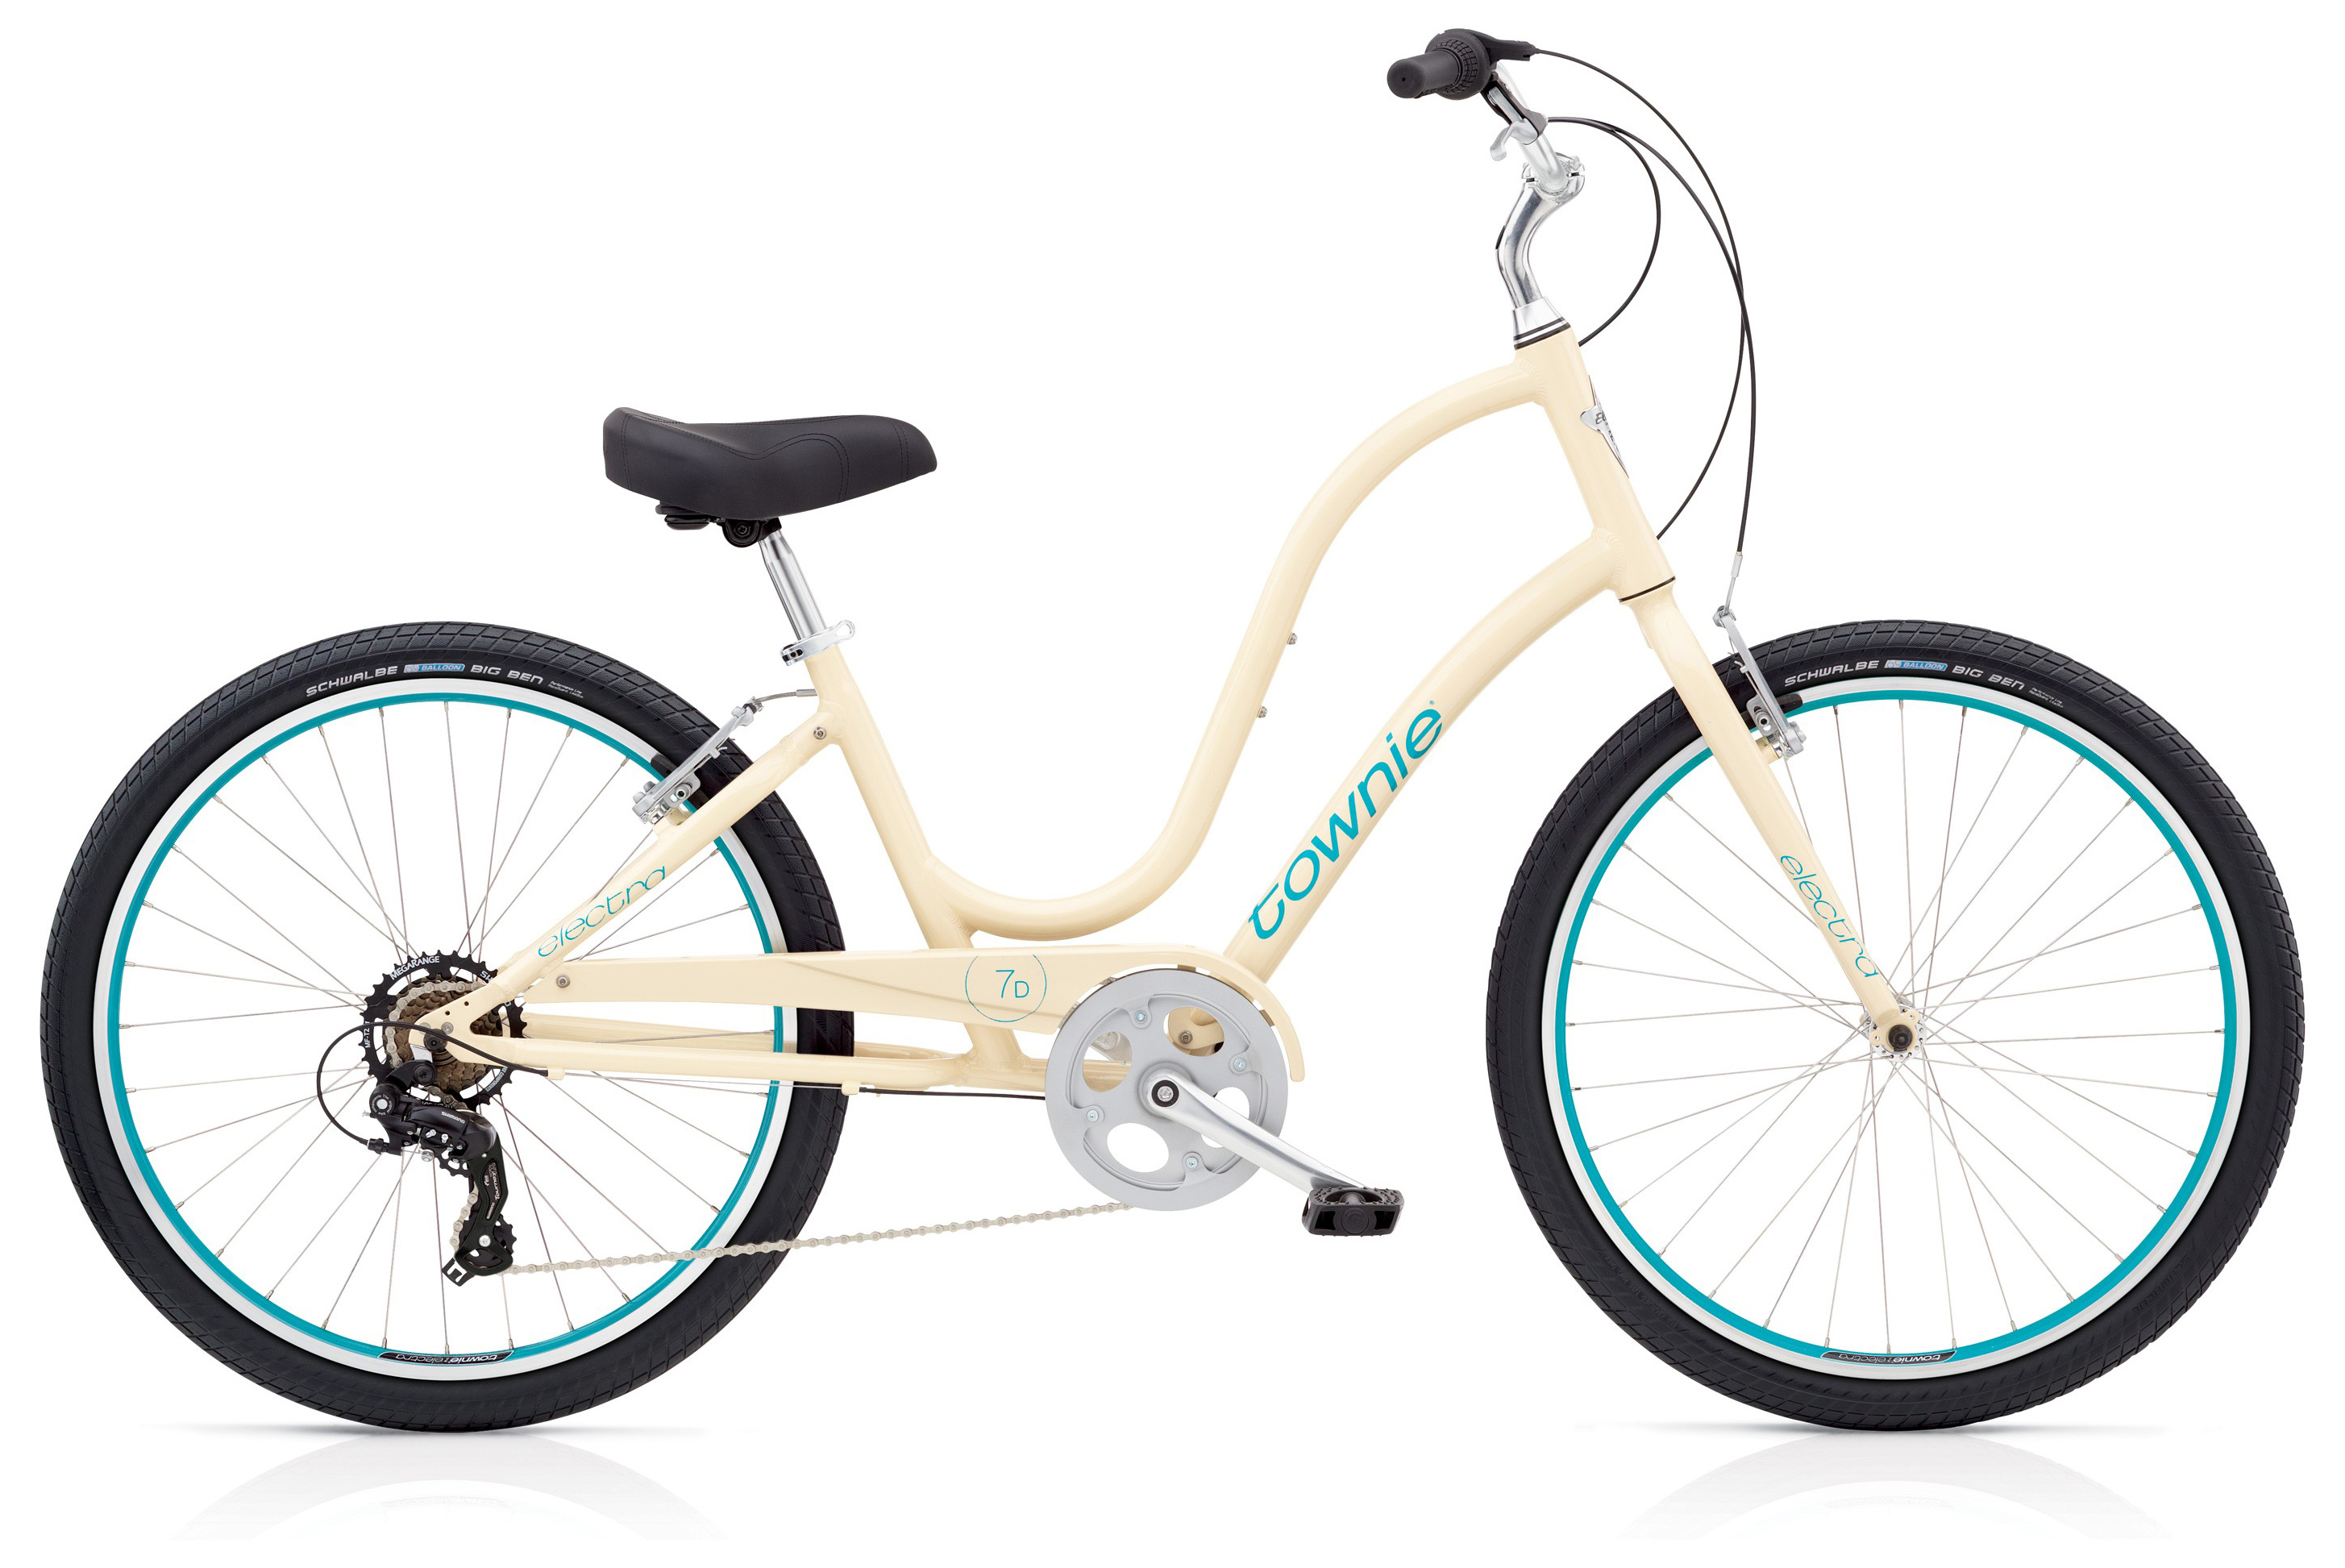  Велосипед Electra Townie Original 7D 2019